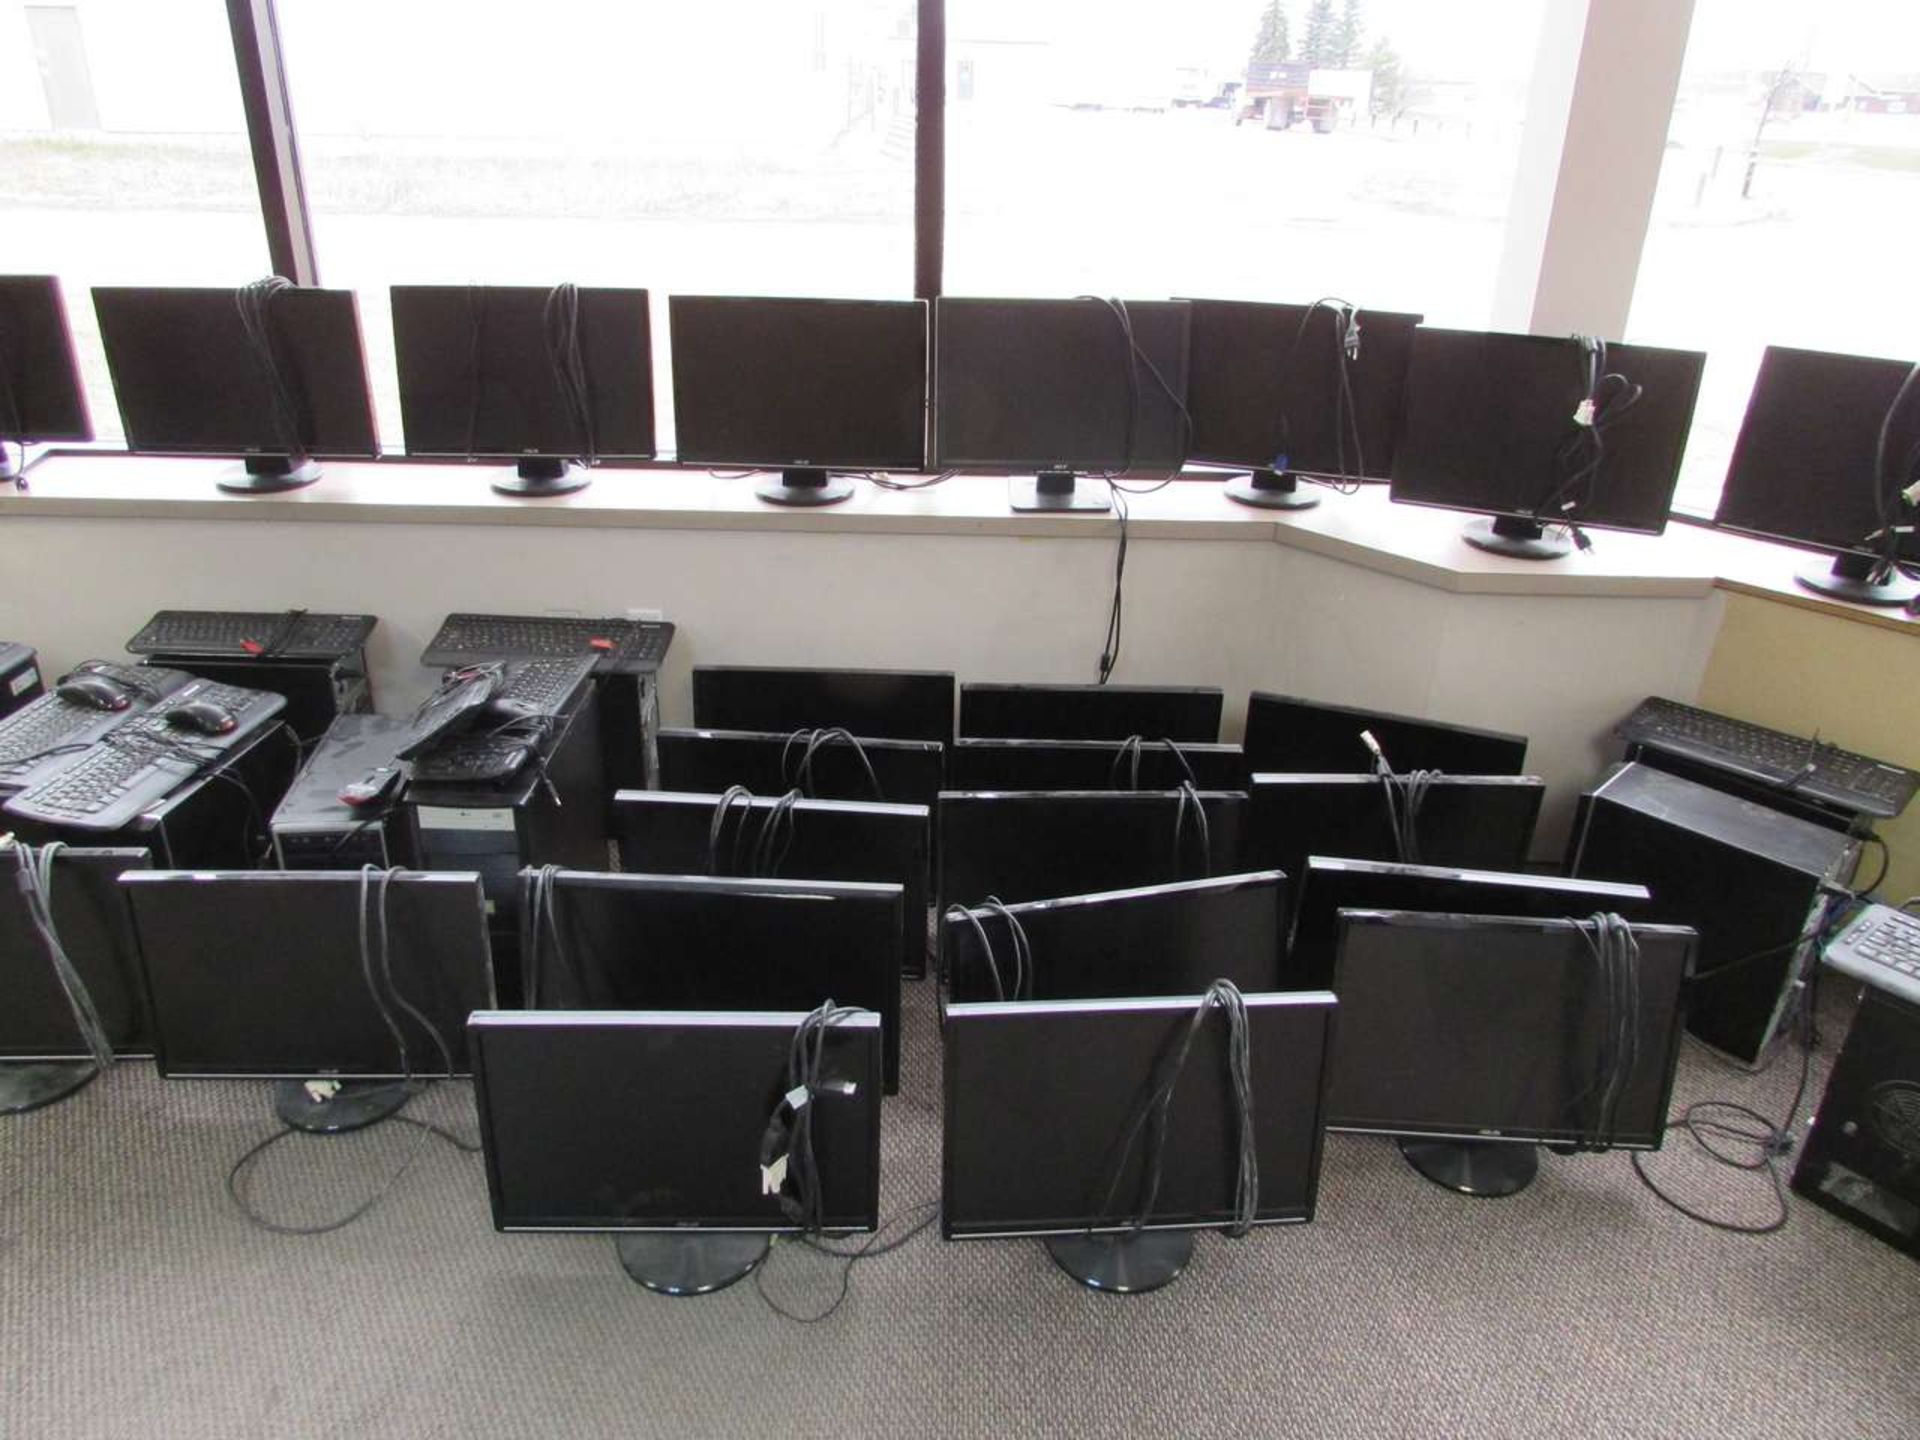 Computers, Monitors, and Printers - Image 4 of 5